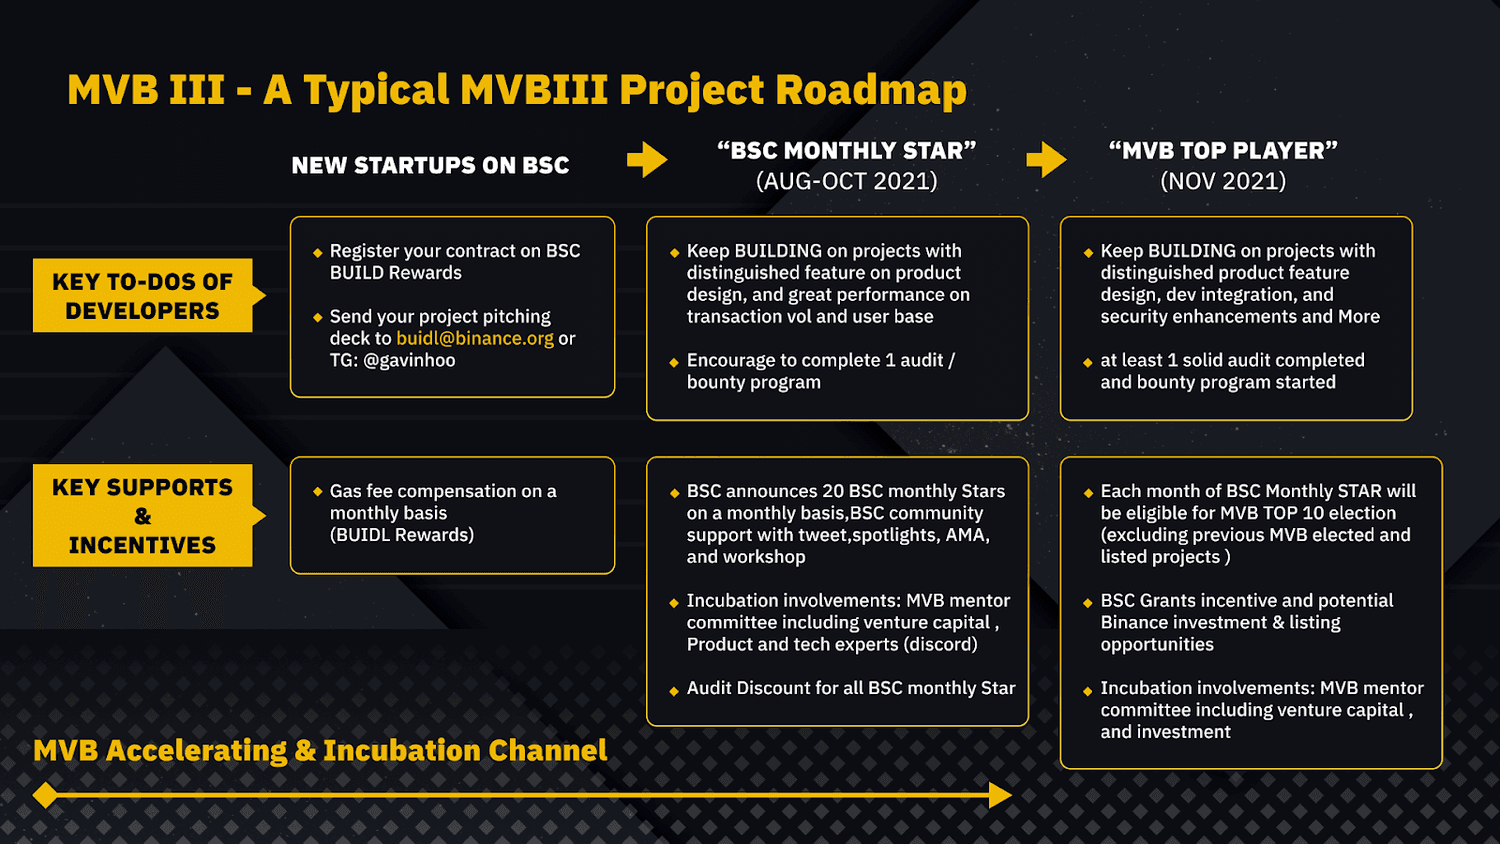 mvb iii roadmap